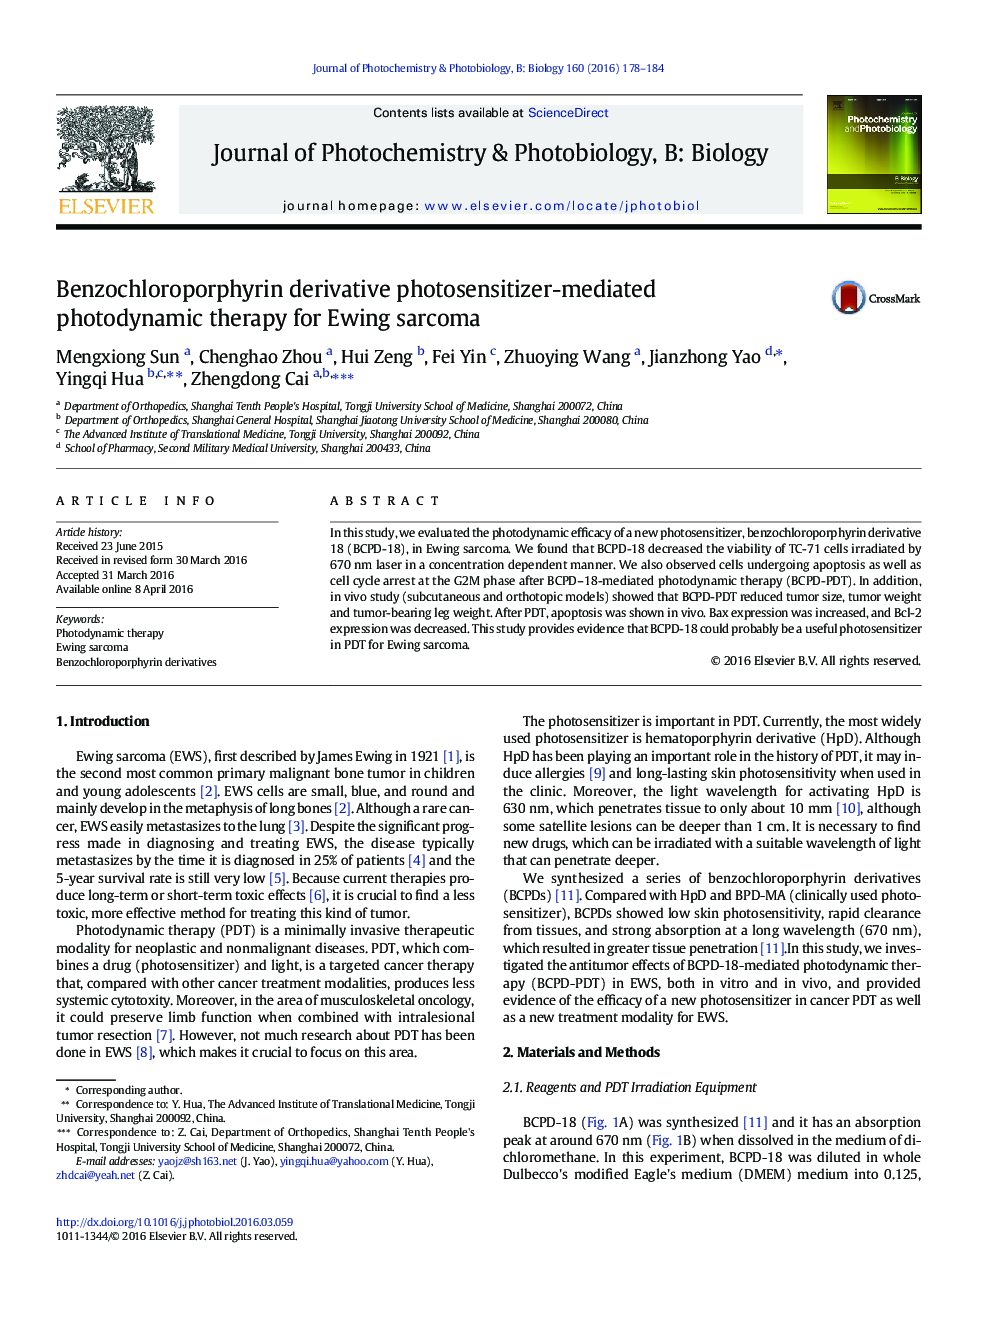 Benzochloroporphyrin derivative photosensitizer-mediated photodynamic therapy for Ewing sarcoma